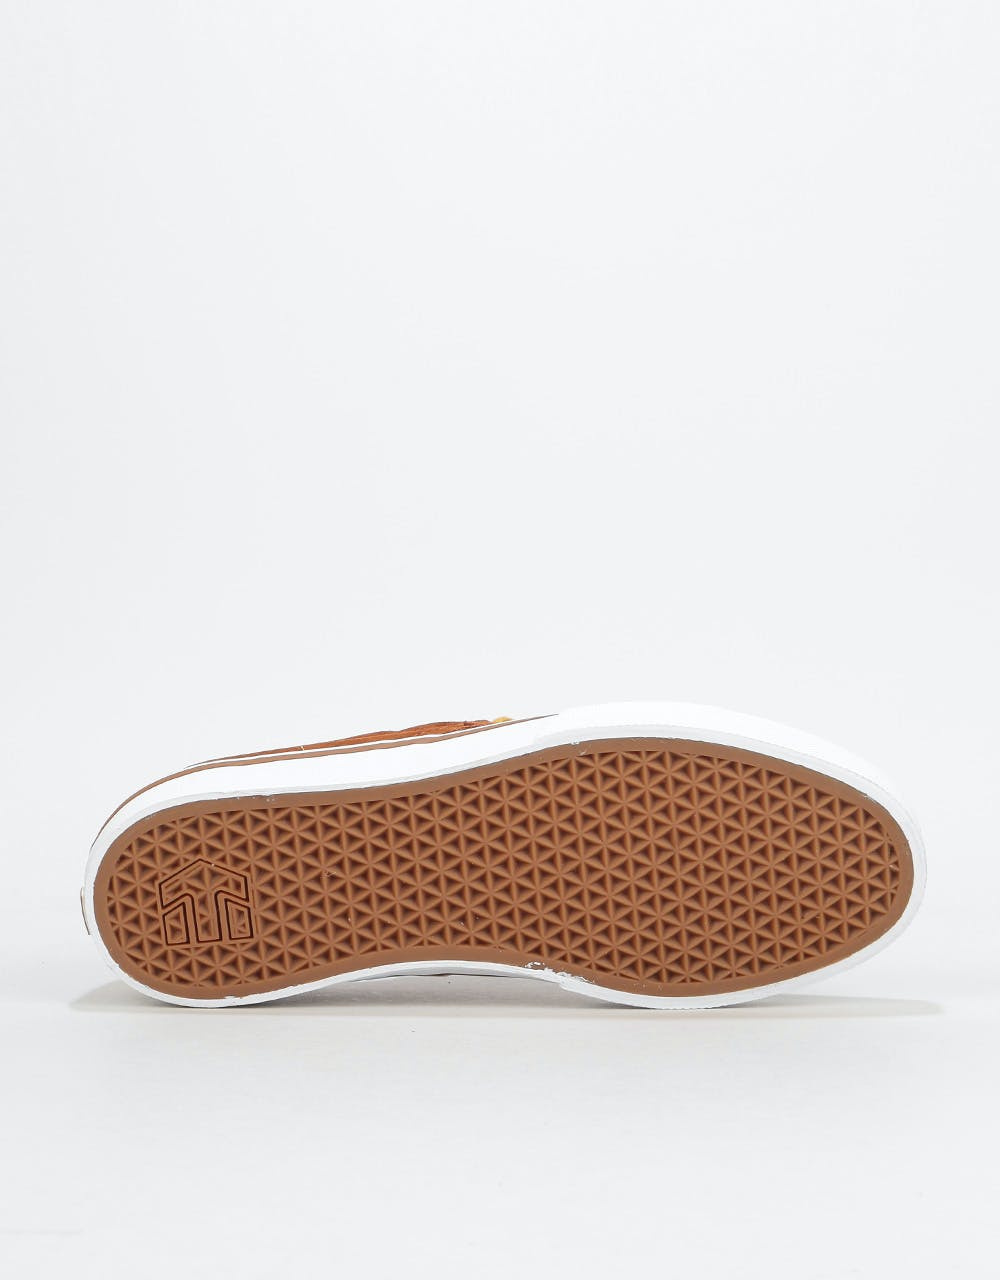 Etnies Jameson Vulc Skate Shoes - Brown/Tan